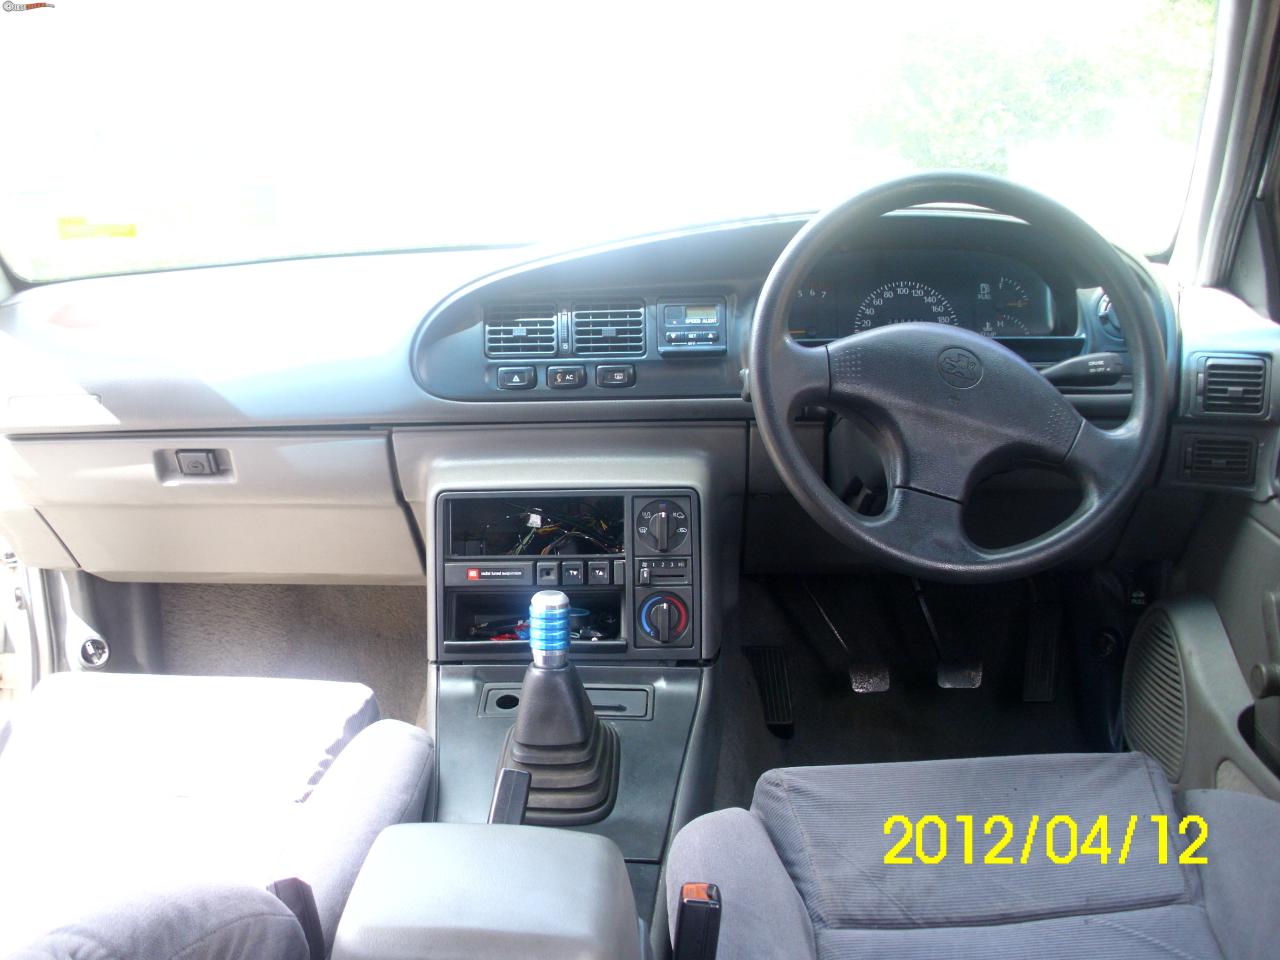 1995 Holden Commodore Vr